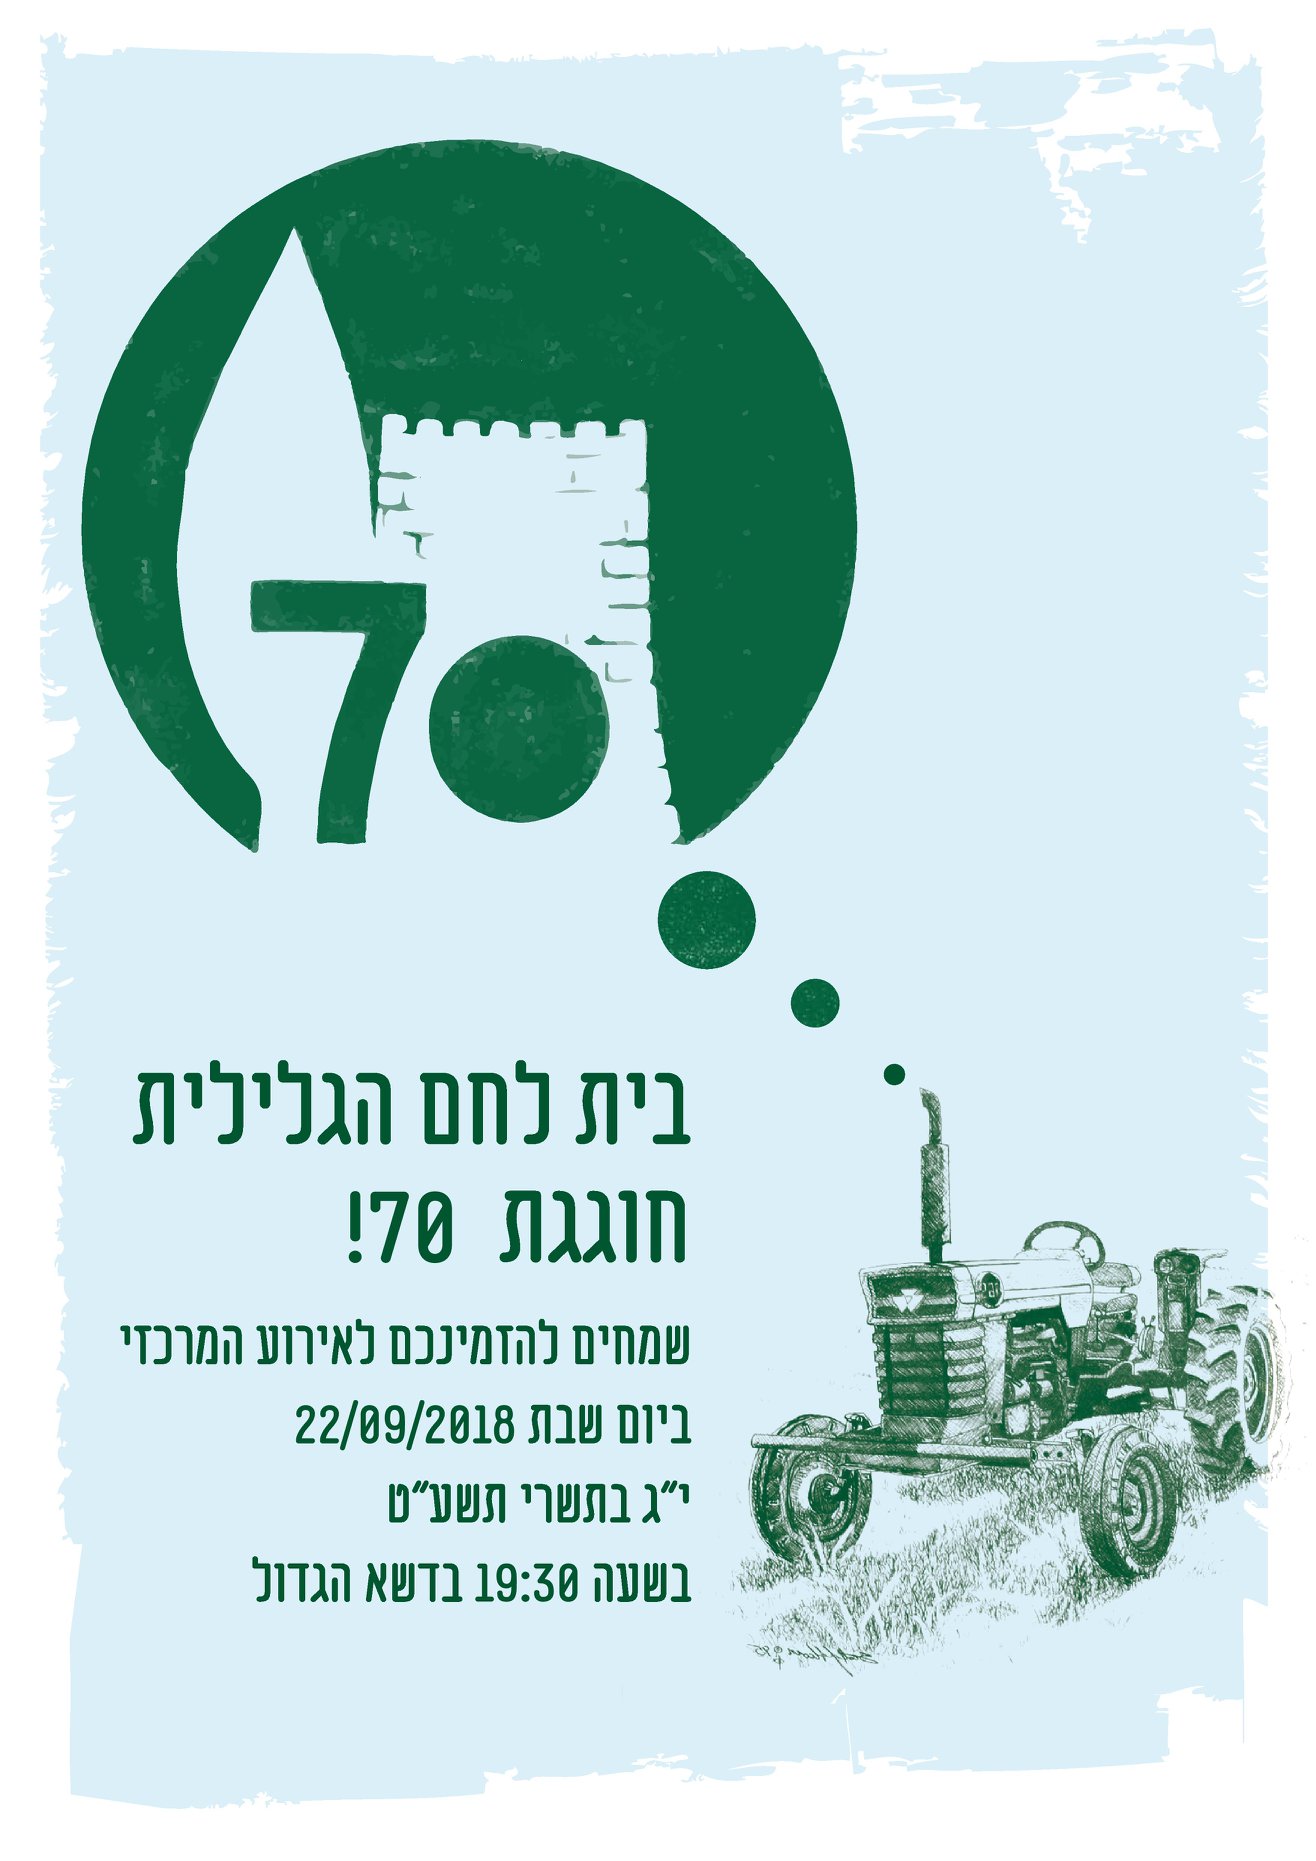 Beit Lechem Haglilit Celebrates 70 years